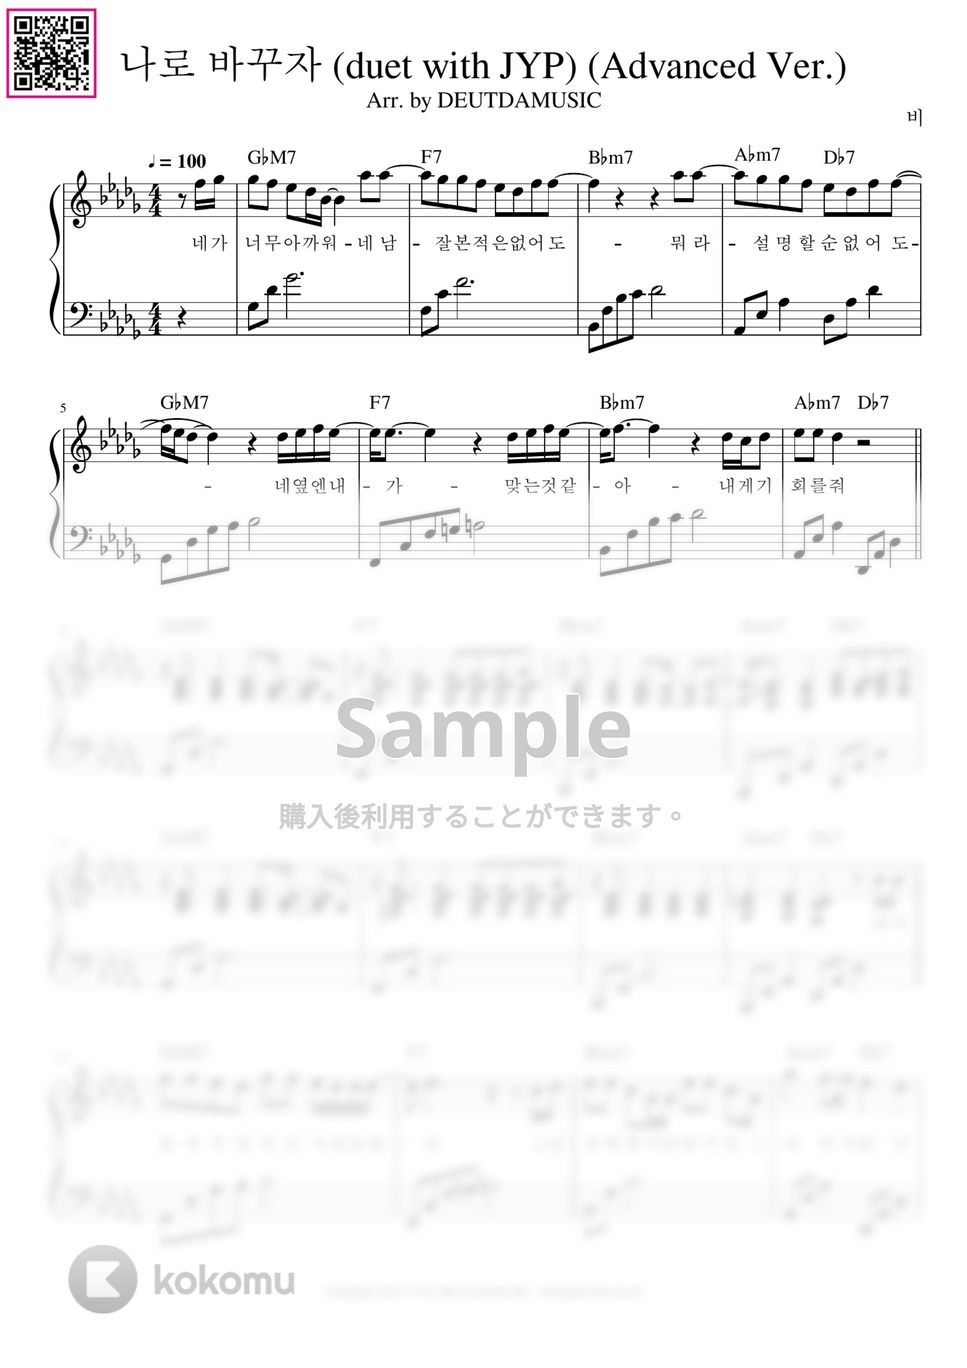 RAIN - Switch to me (僕に変えよう) (duet with JYP) (中級バージョン) by DEUTDAMUSIC